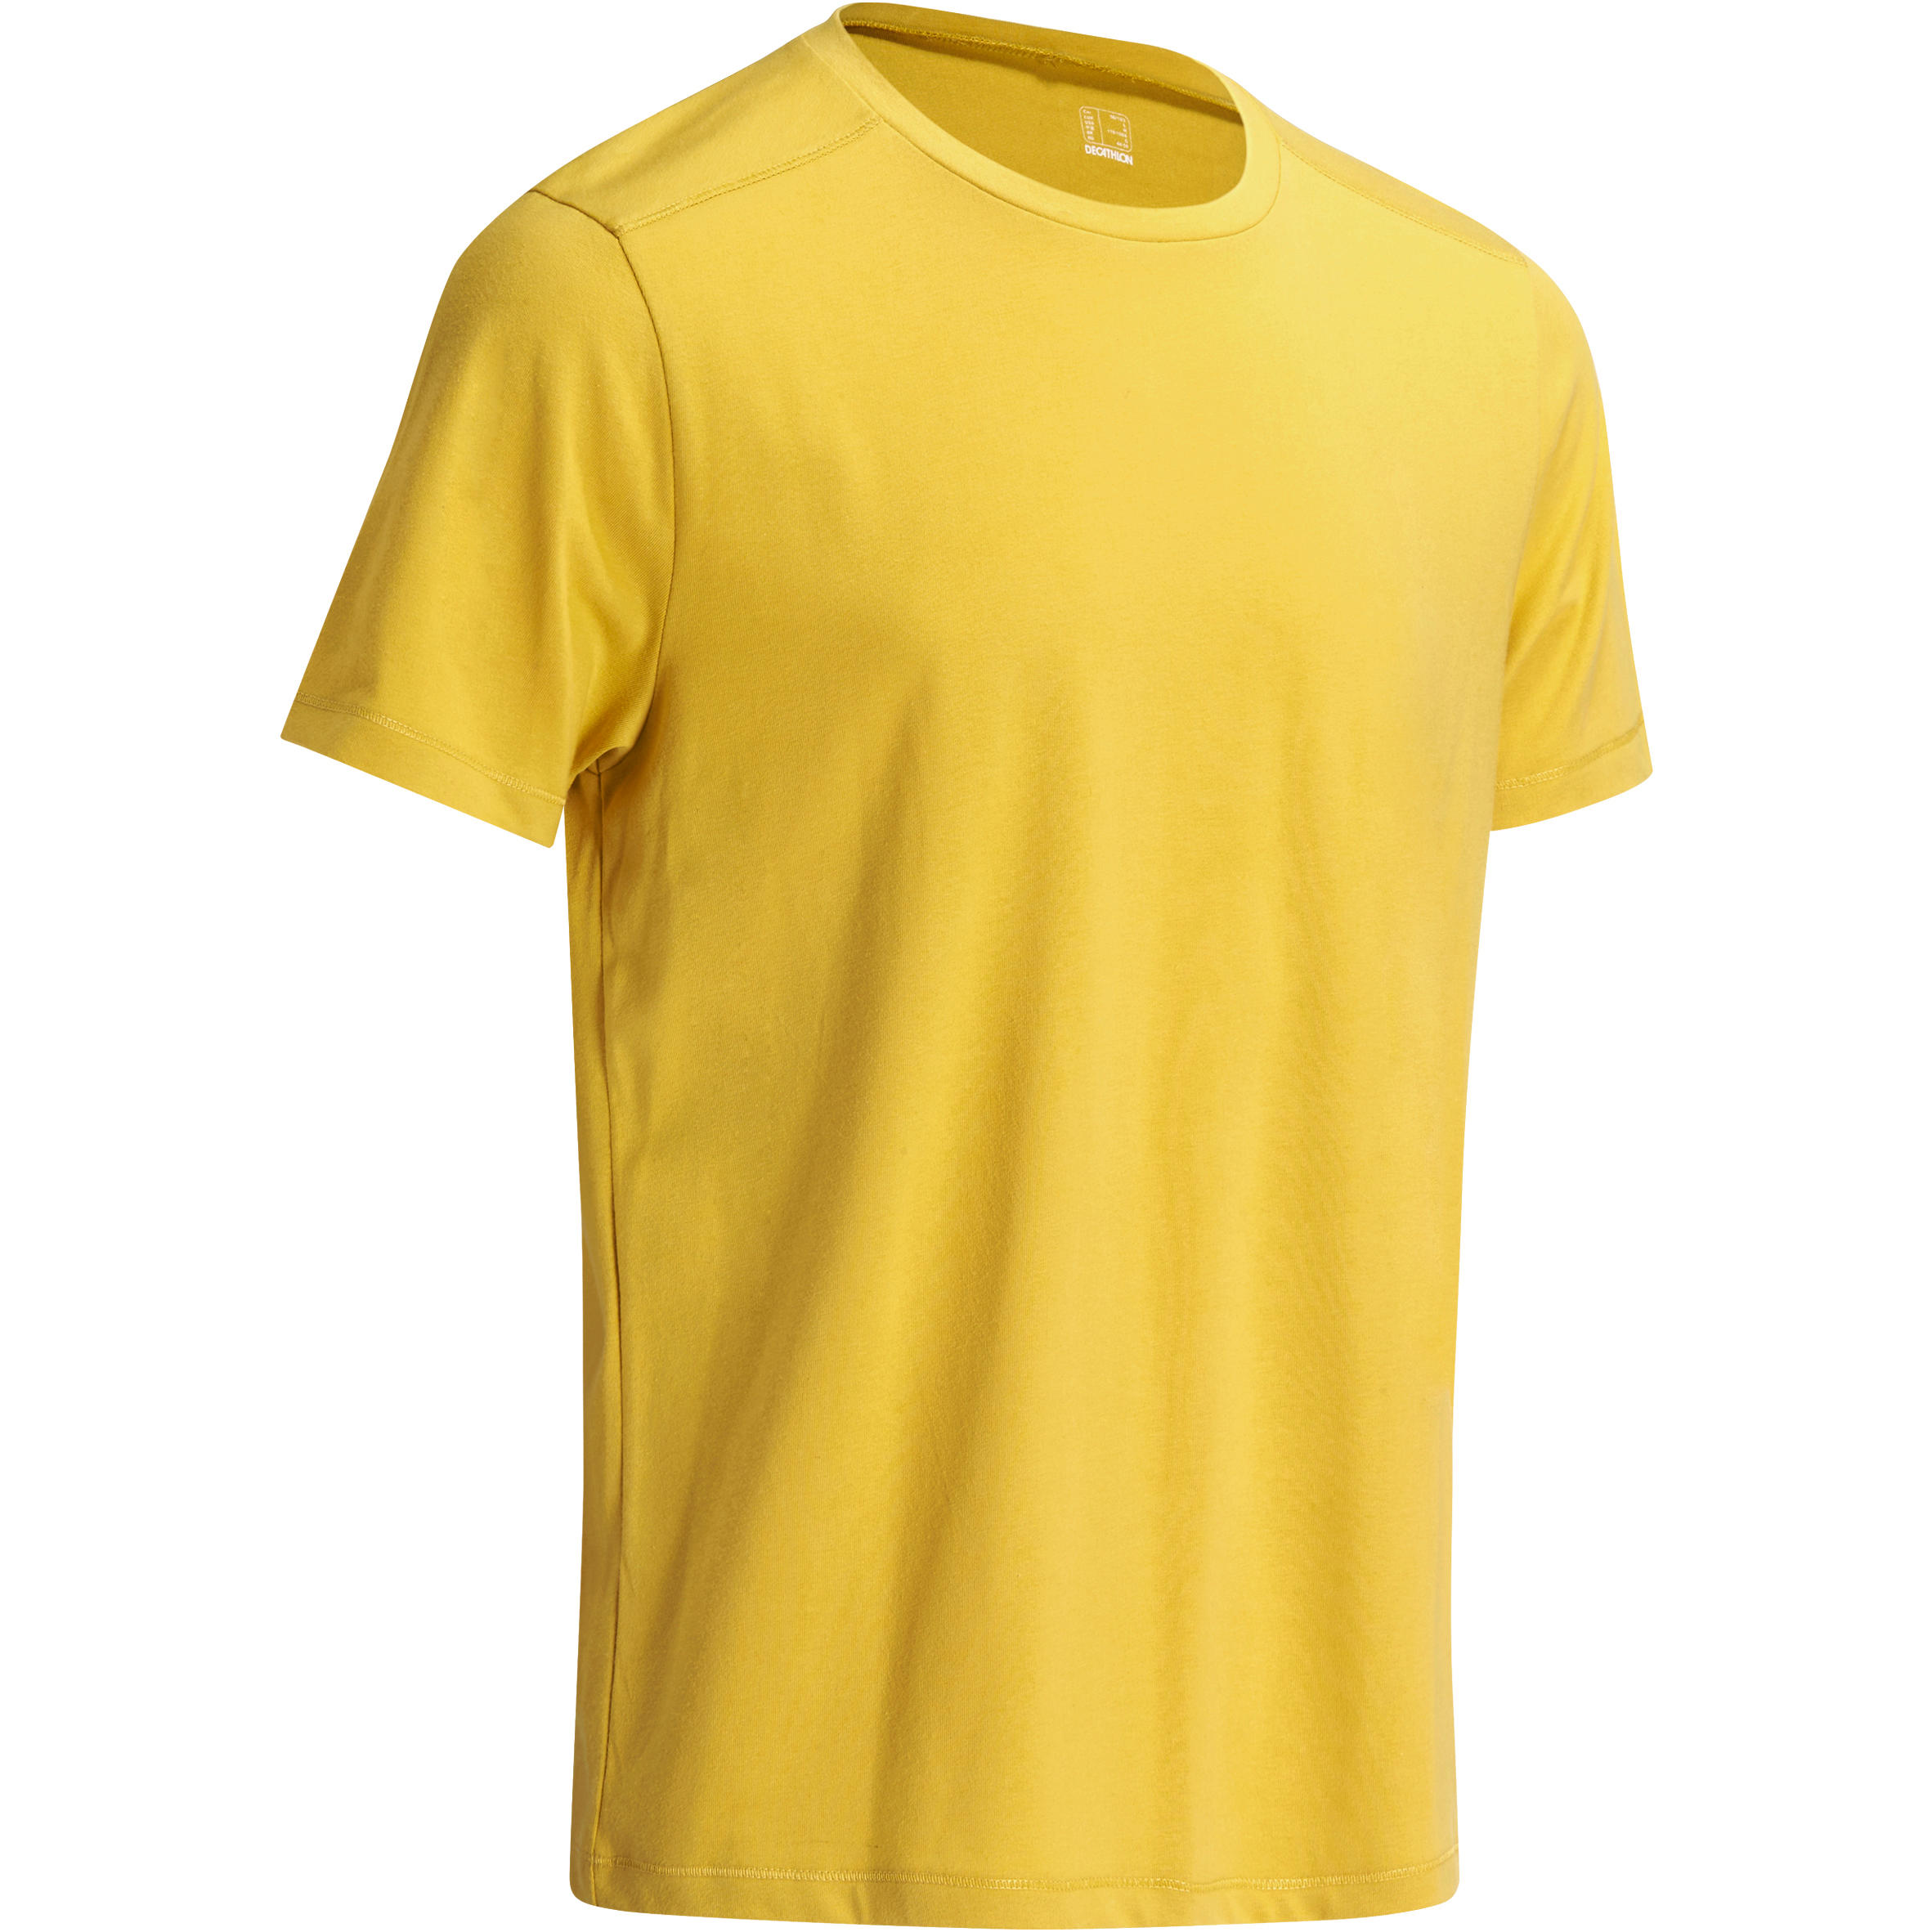 decathlon yellow t shirt